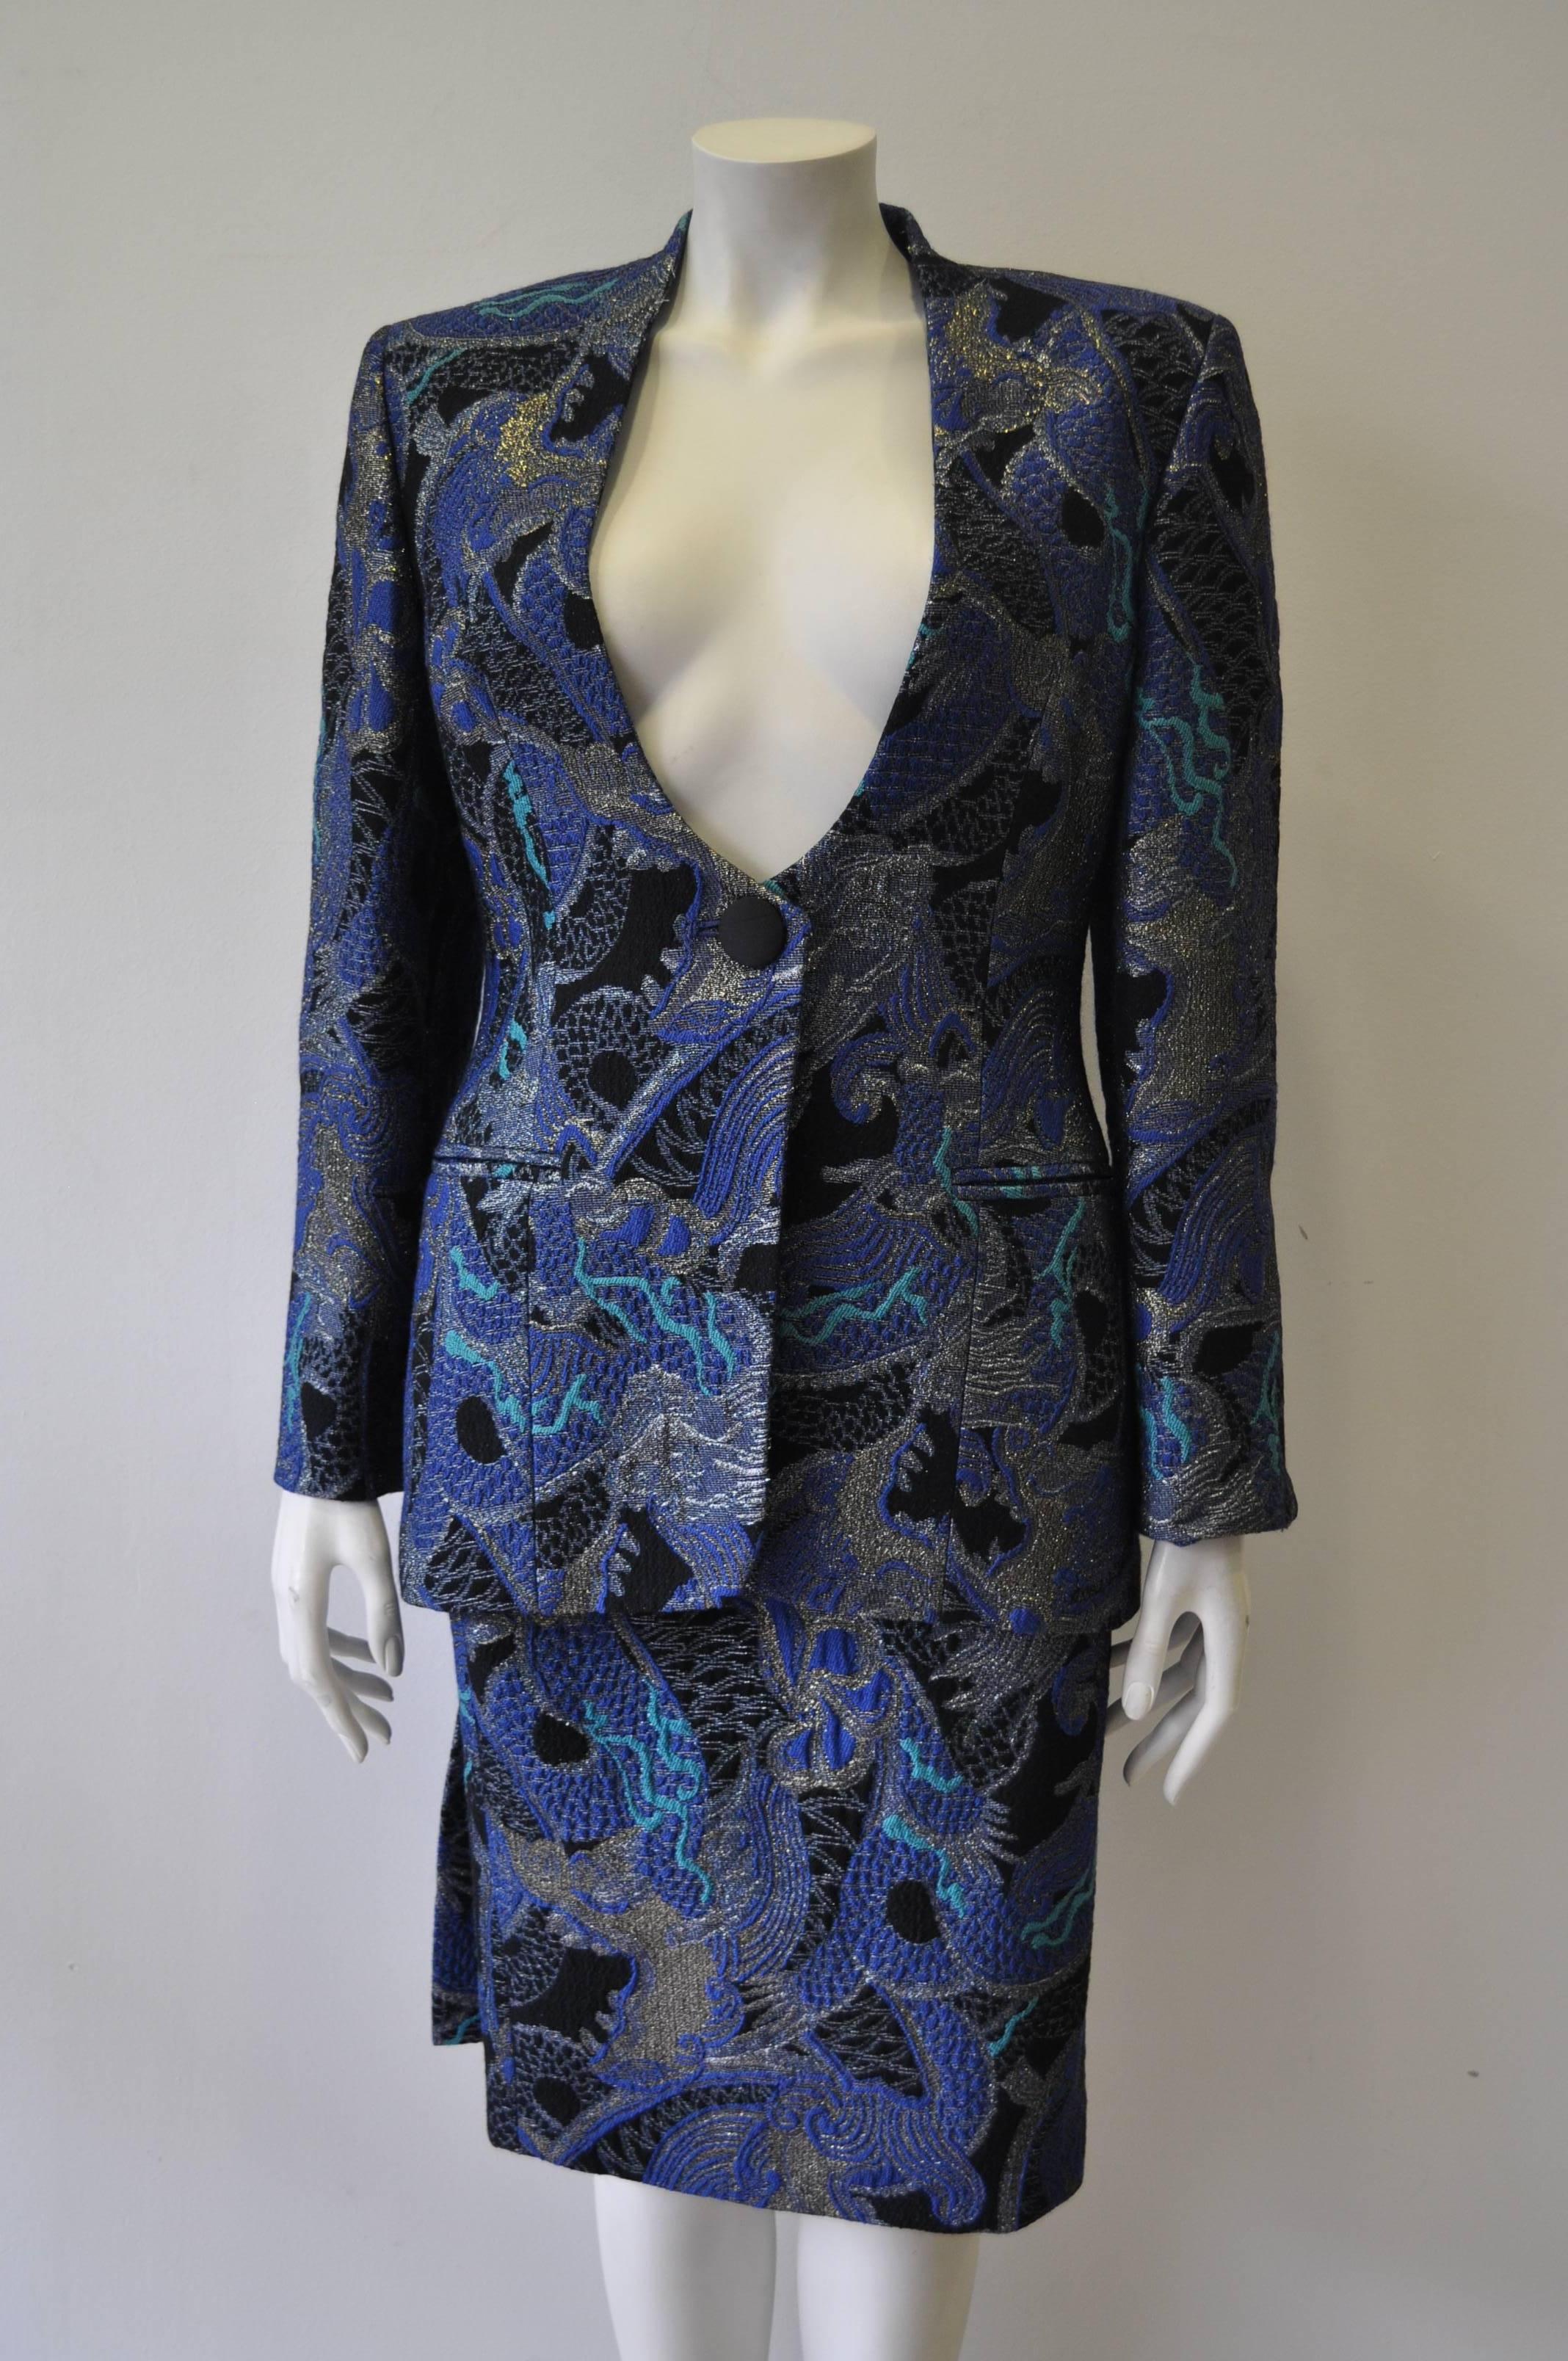 Posh Gianfranco Ferre Plunging Neckline Blue Hue Design Skirt Suit